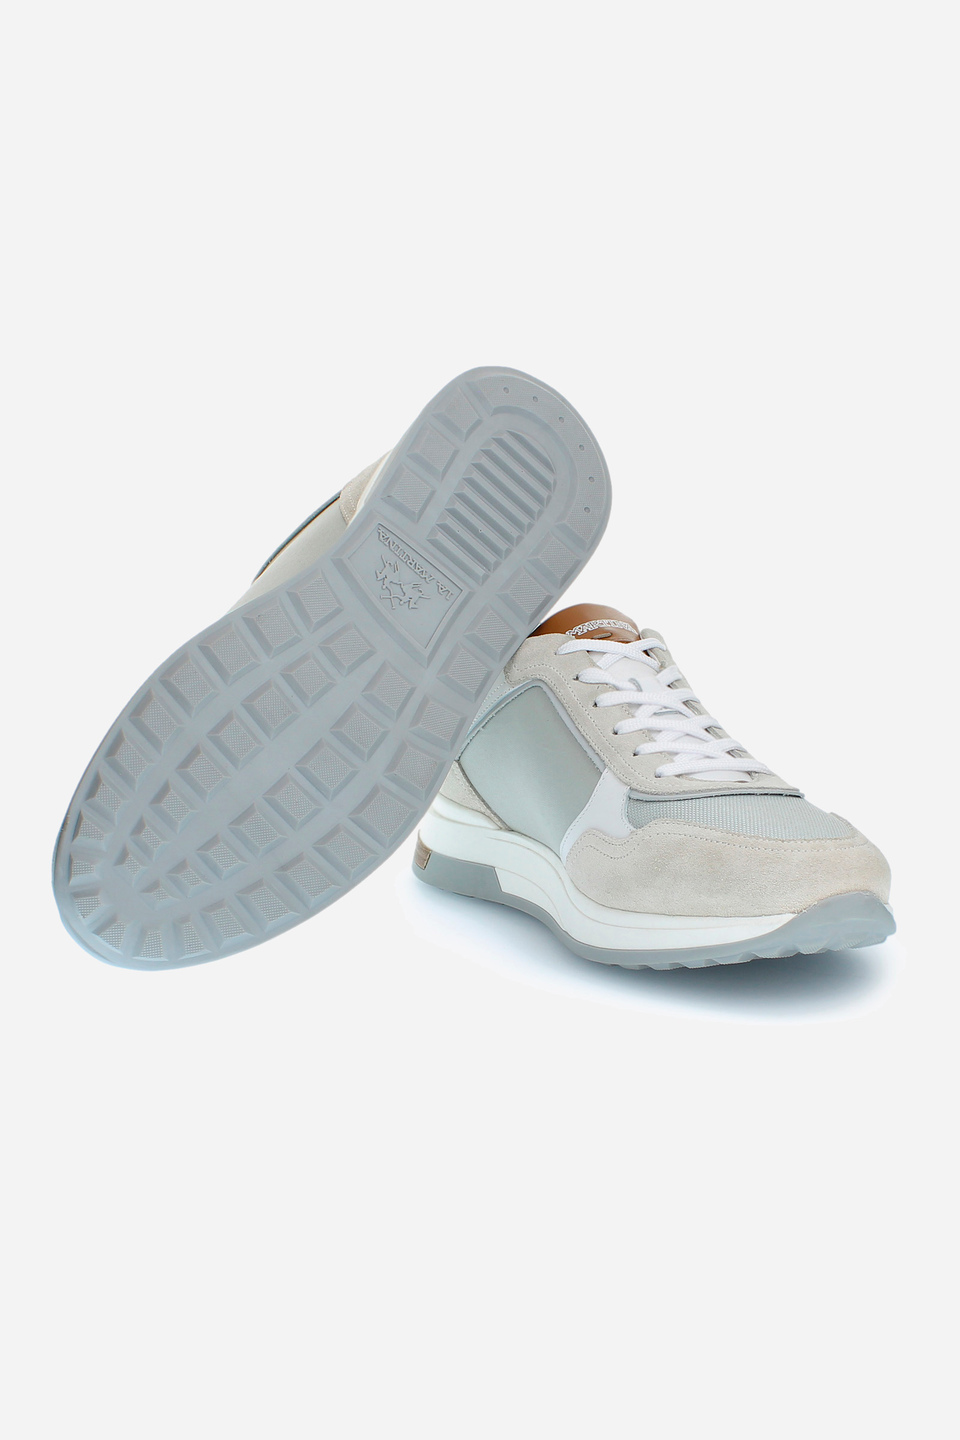 Sneaker da uomo con suola rialzata in tela e camoscio | La Martina - Official Online Shop